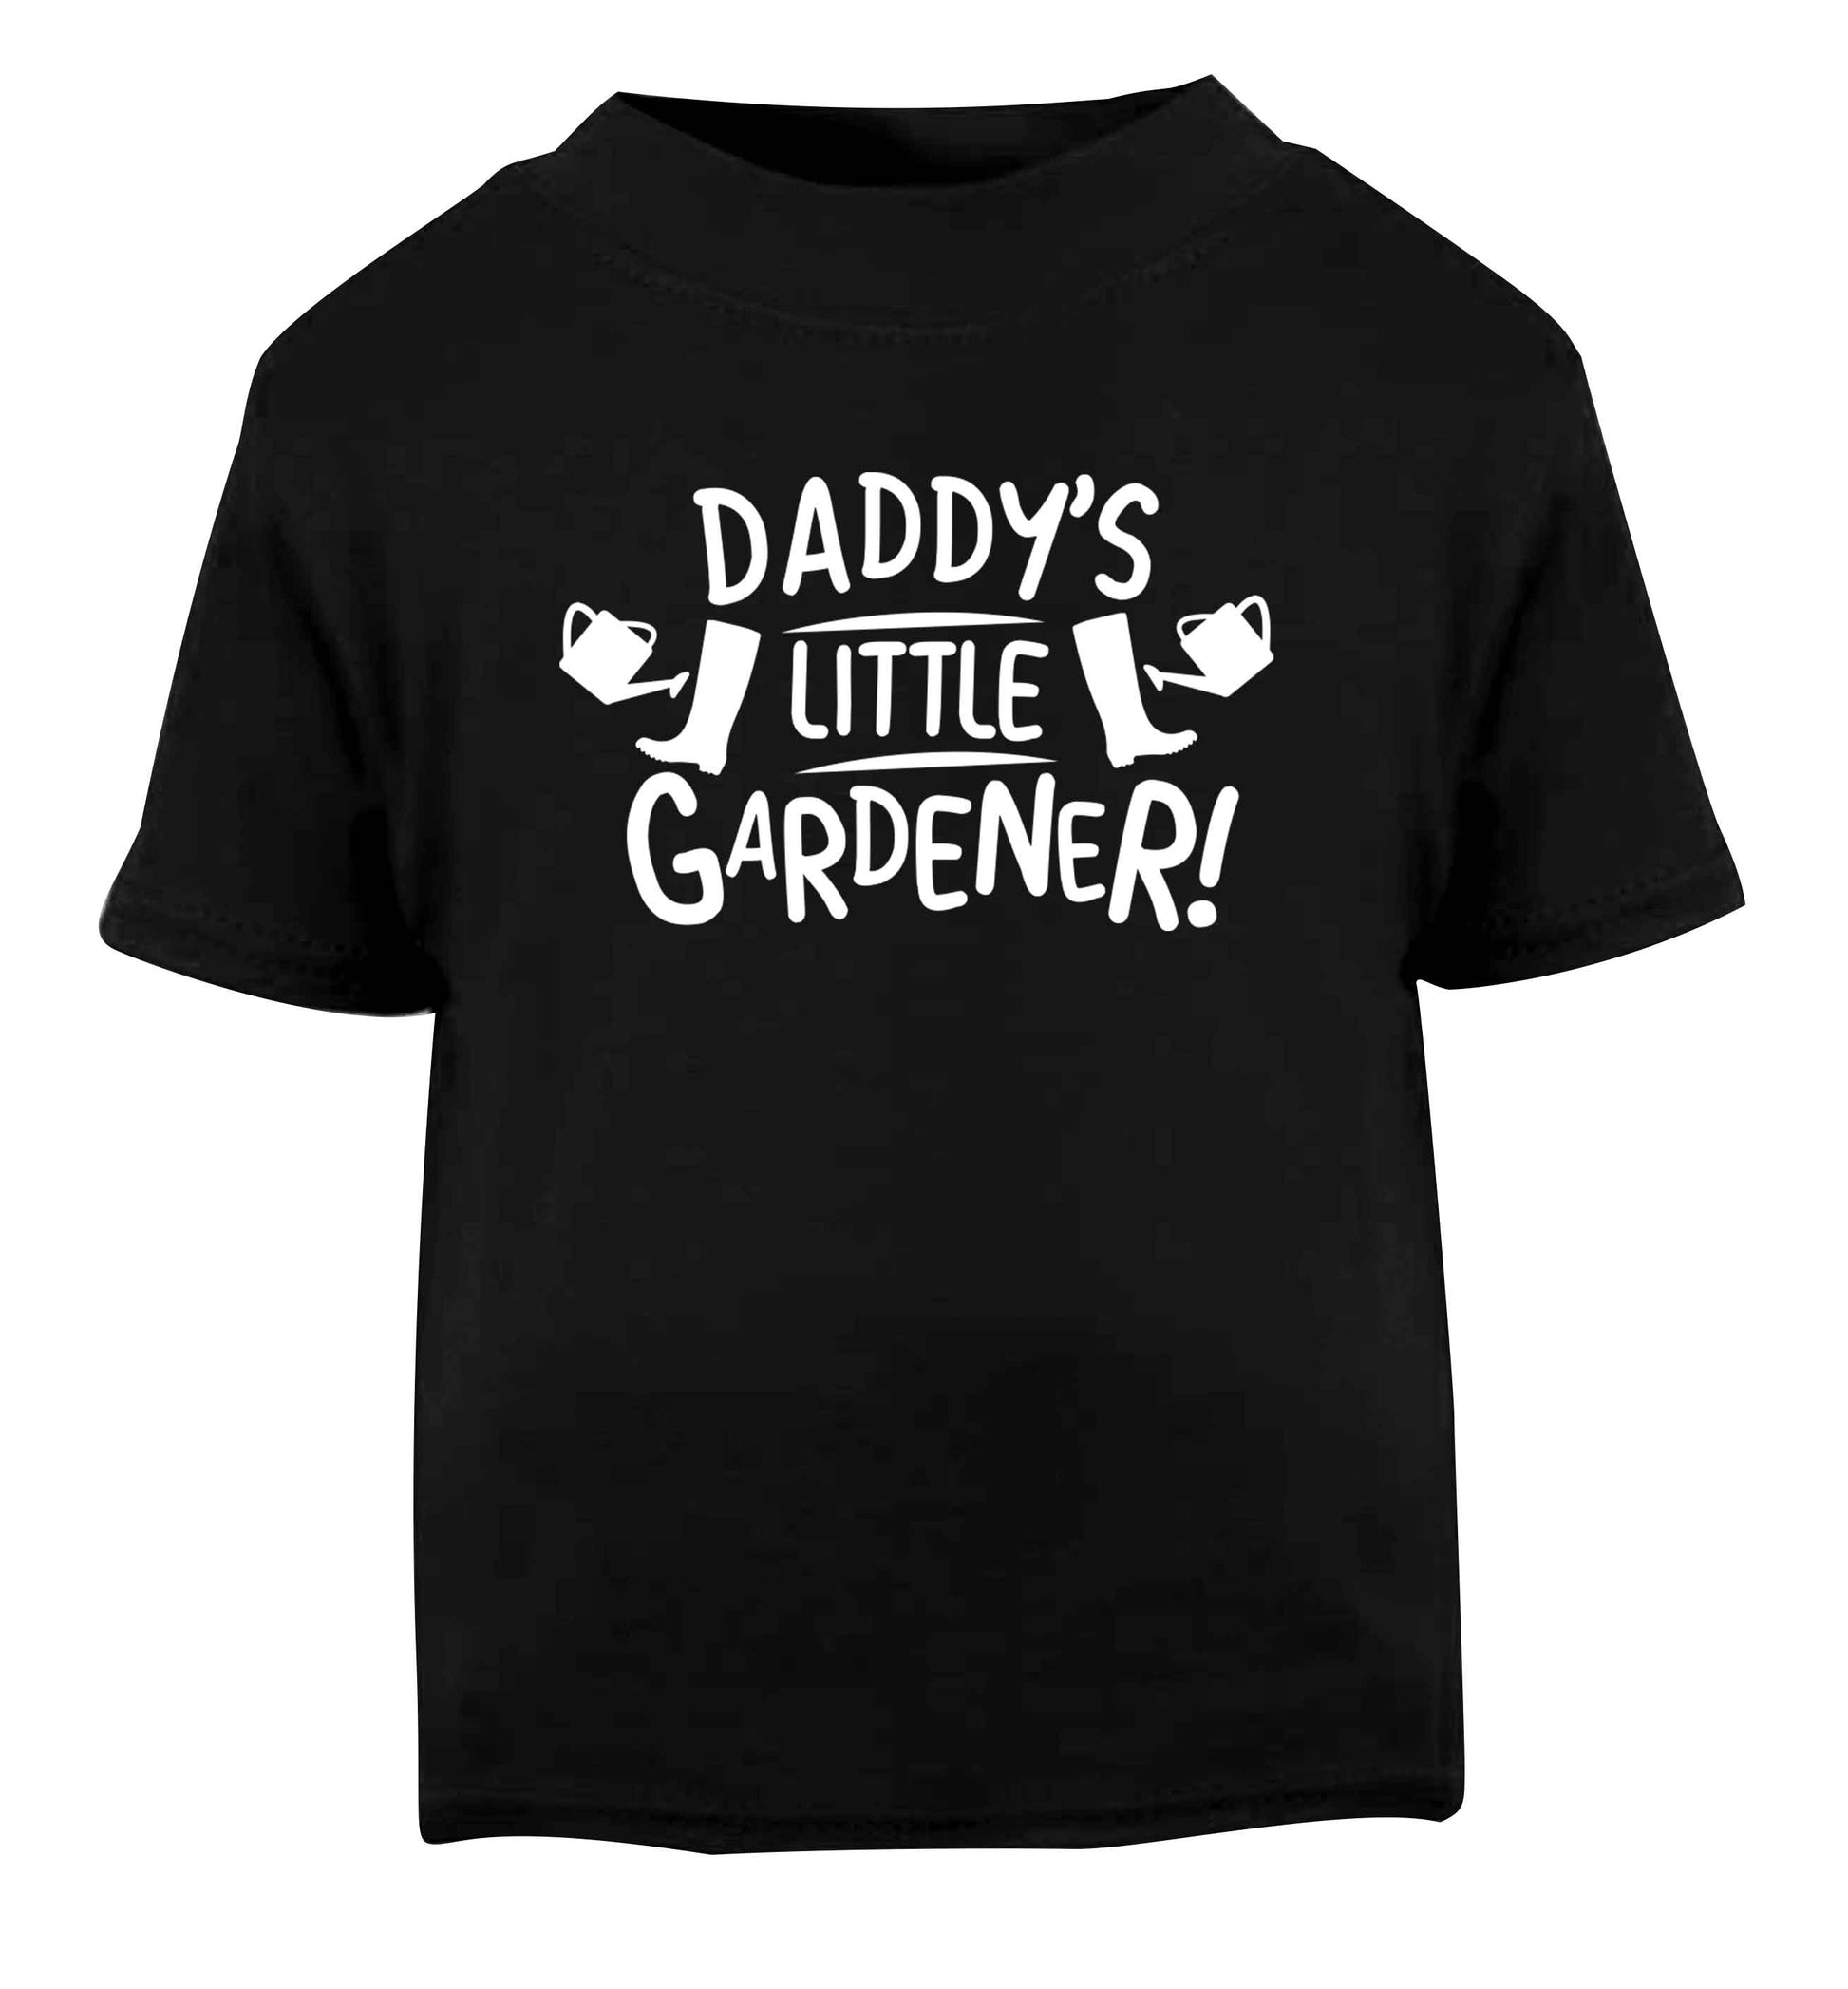 Daddy's little gardener Black Baby Toddler Tshirt 2 years